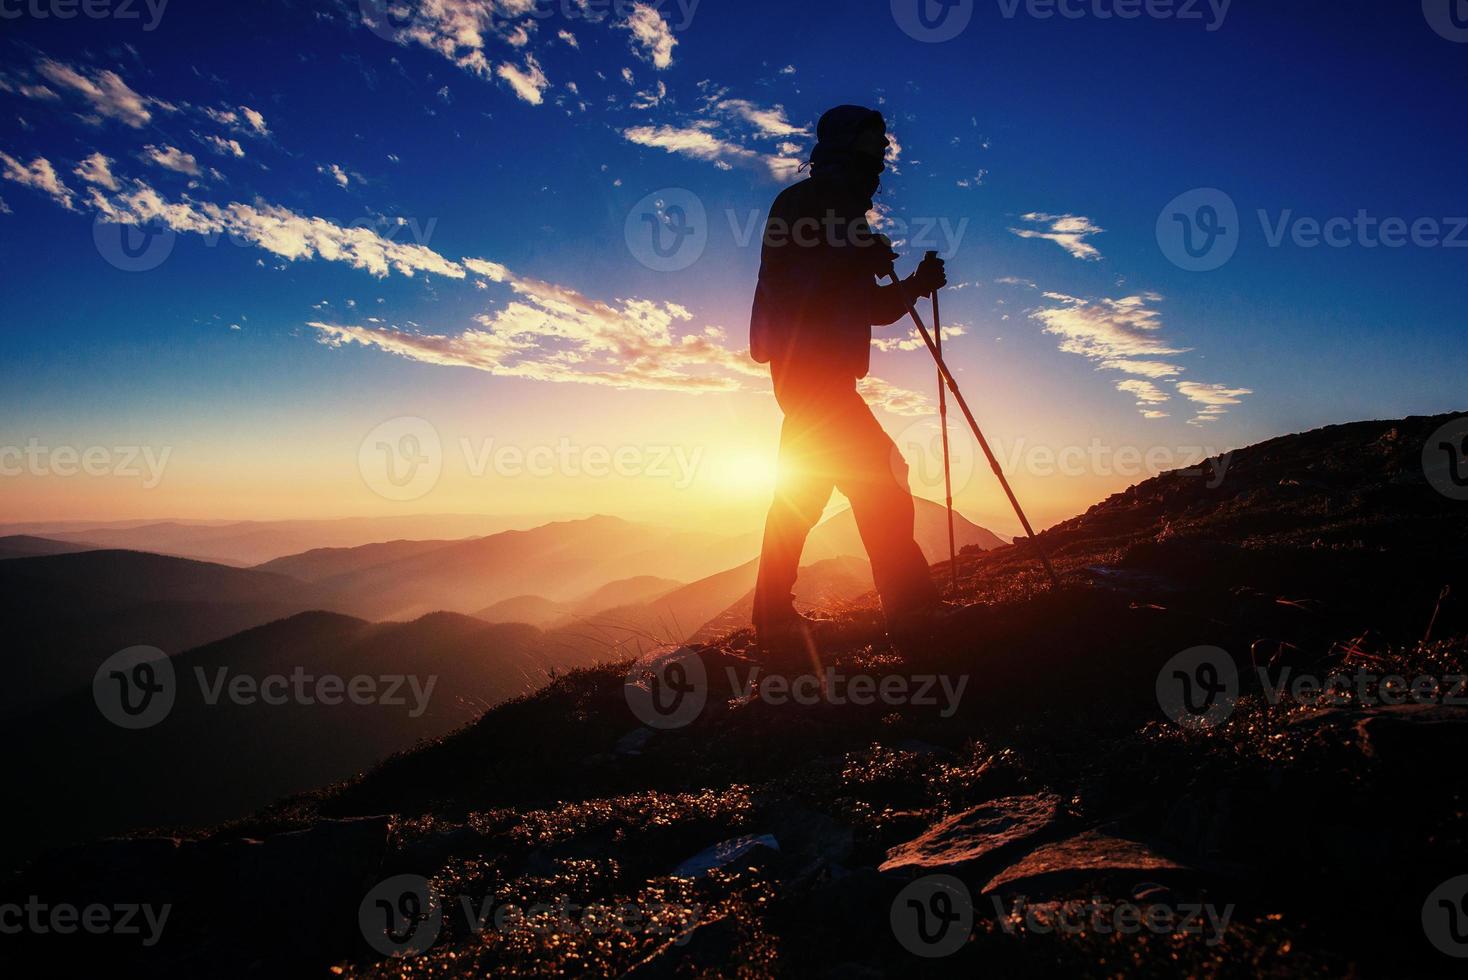 alpinista ao pôr do sol. mundo da beleza foto